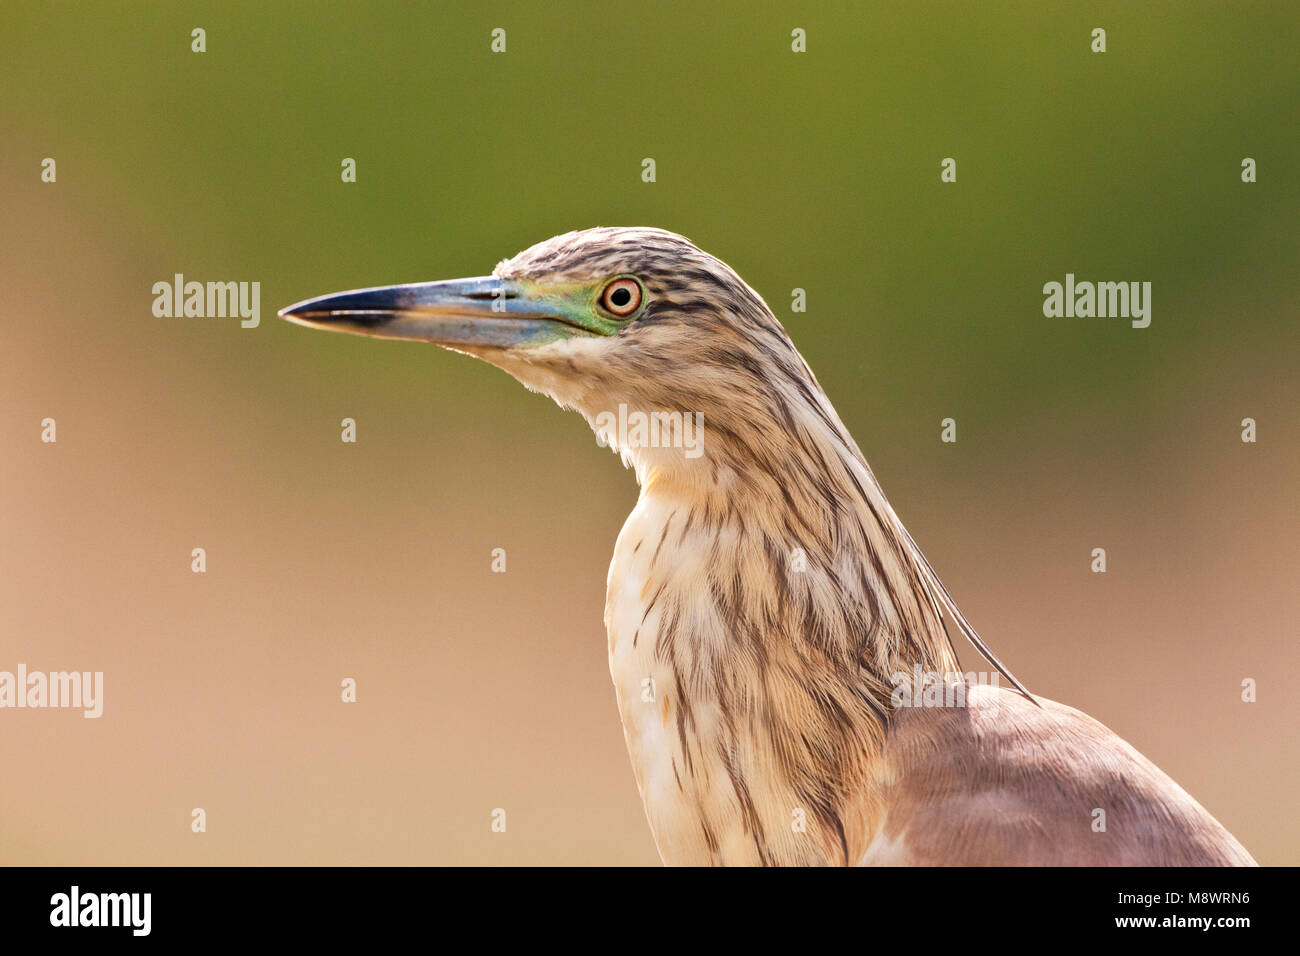 Zomerkleed Ralreiger portret; Summerplumage Squacco heron close-up Stock Photo